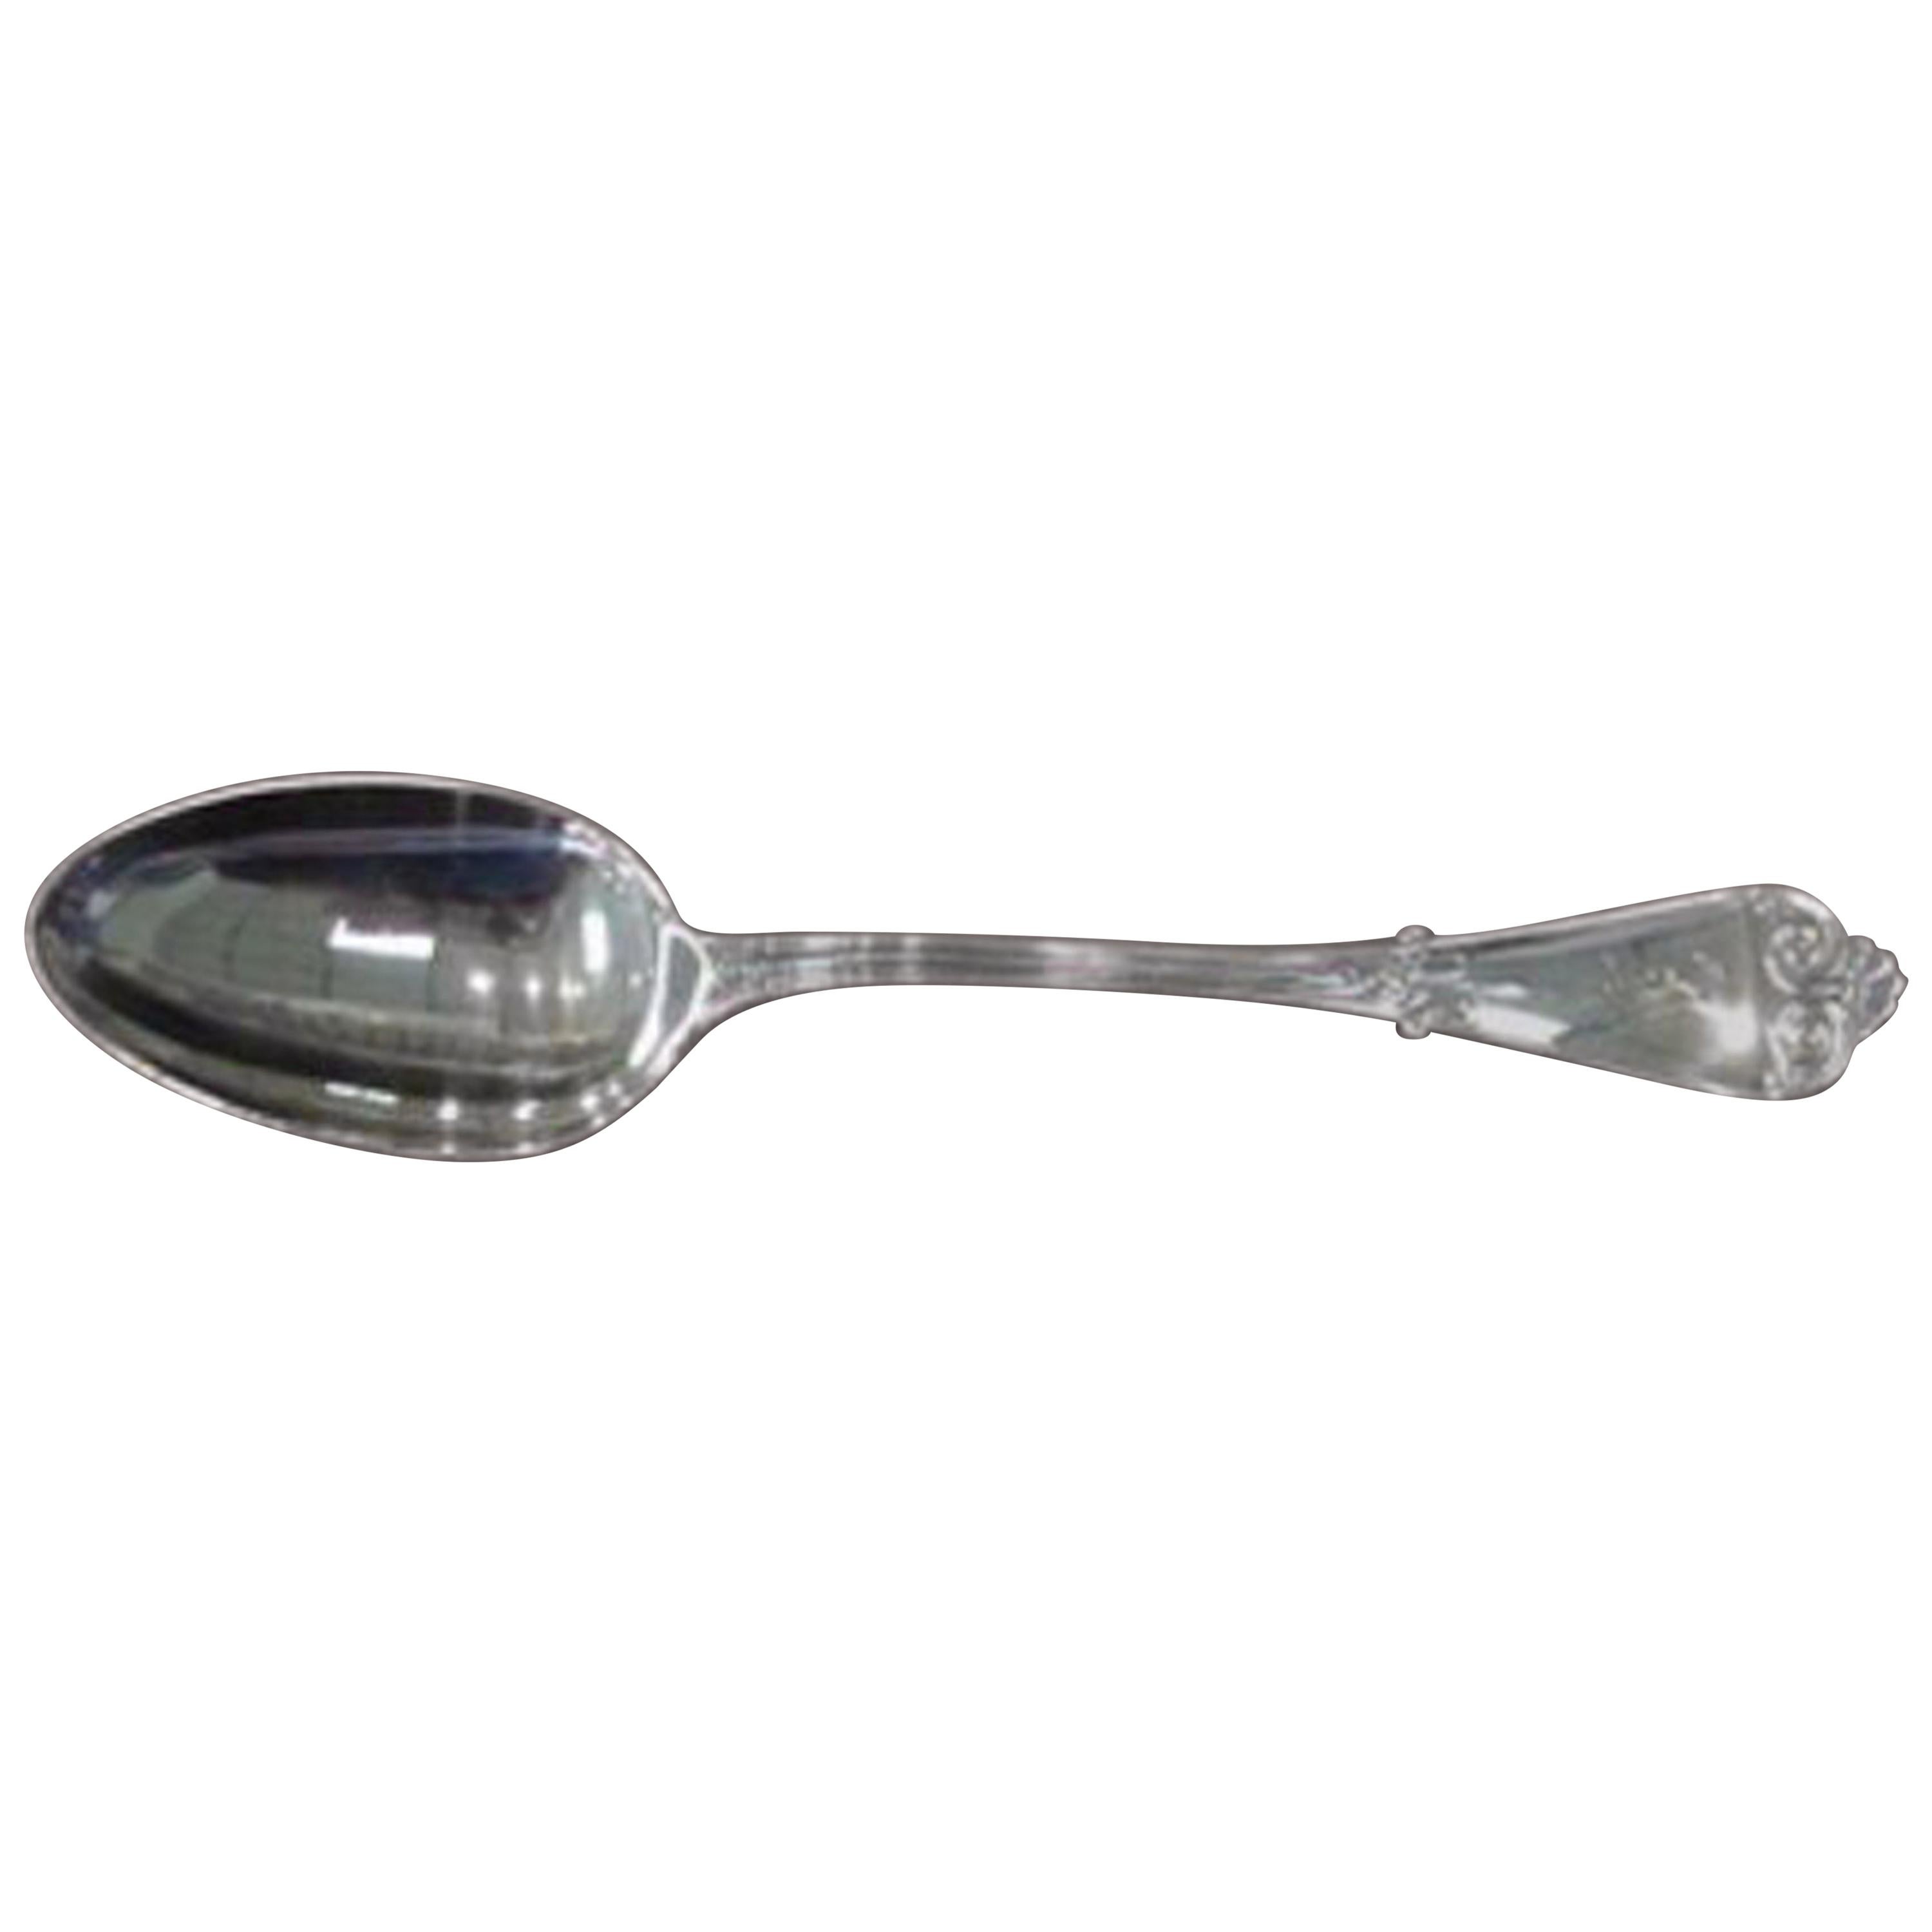 Beekman by Tiffany & Co. Sterling Silver Serving Spoon